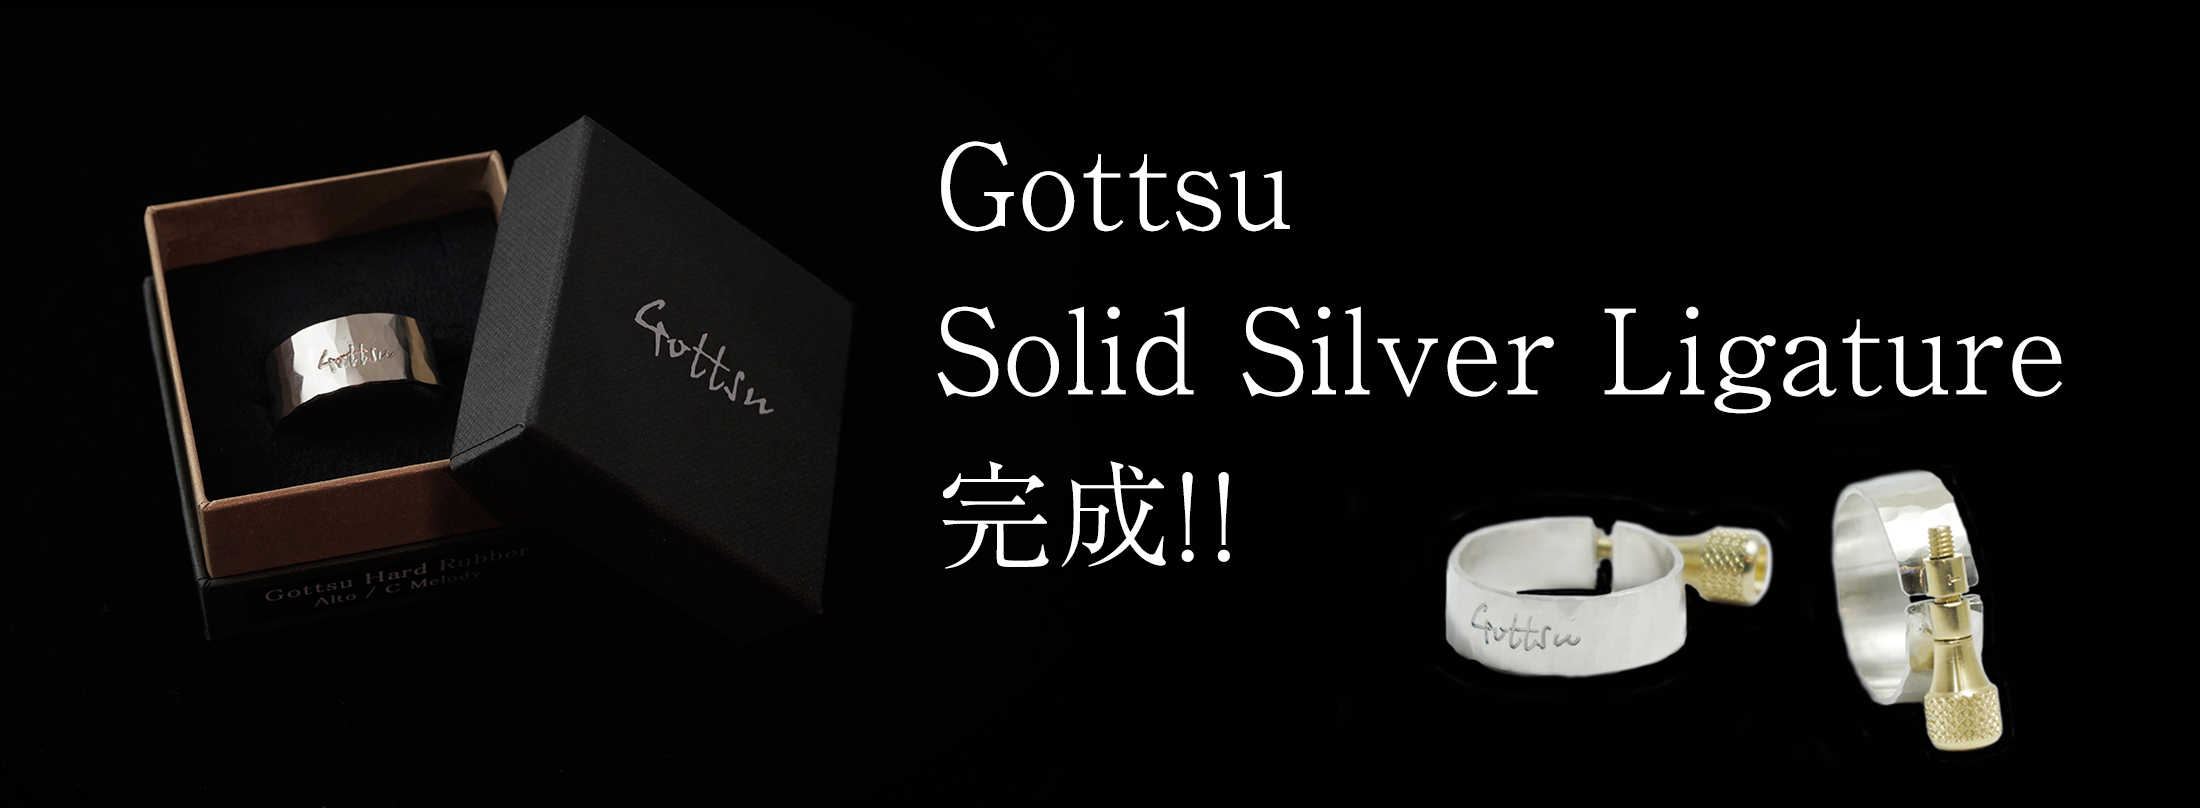 Gottsu Solid Silver Ligature完成!!|サックスオンライン